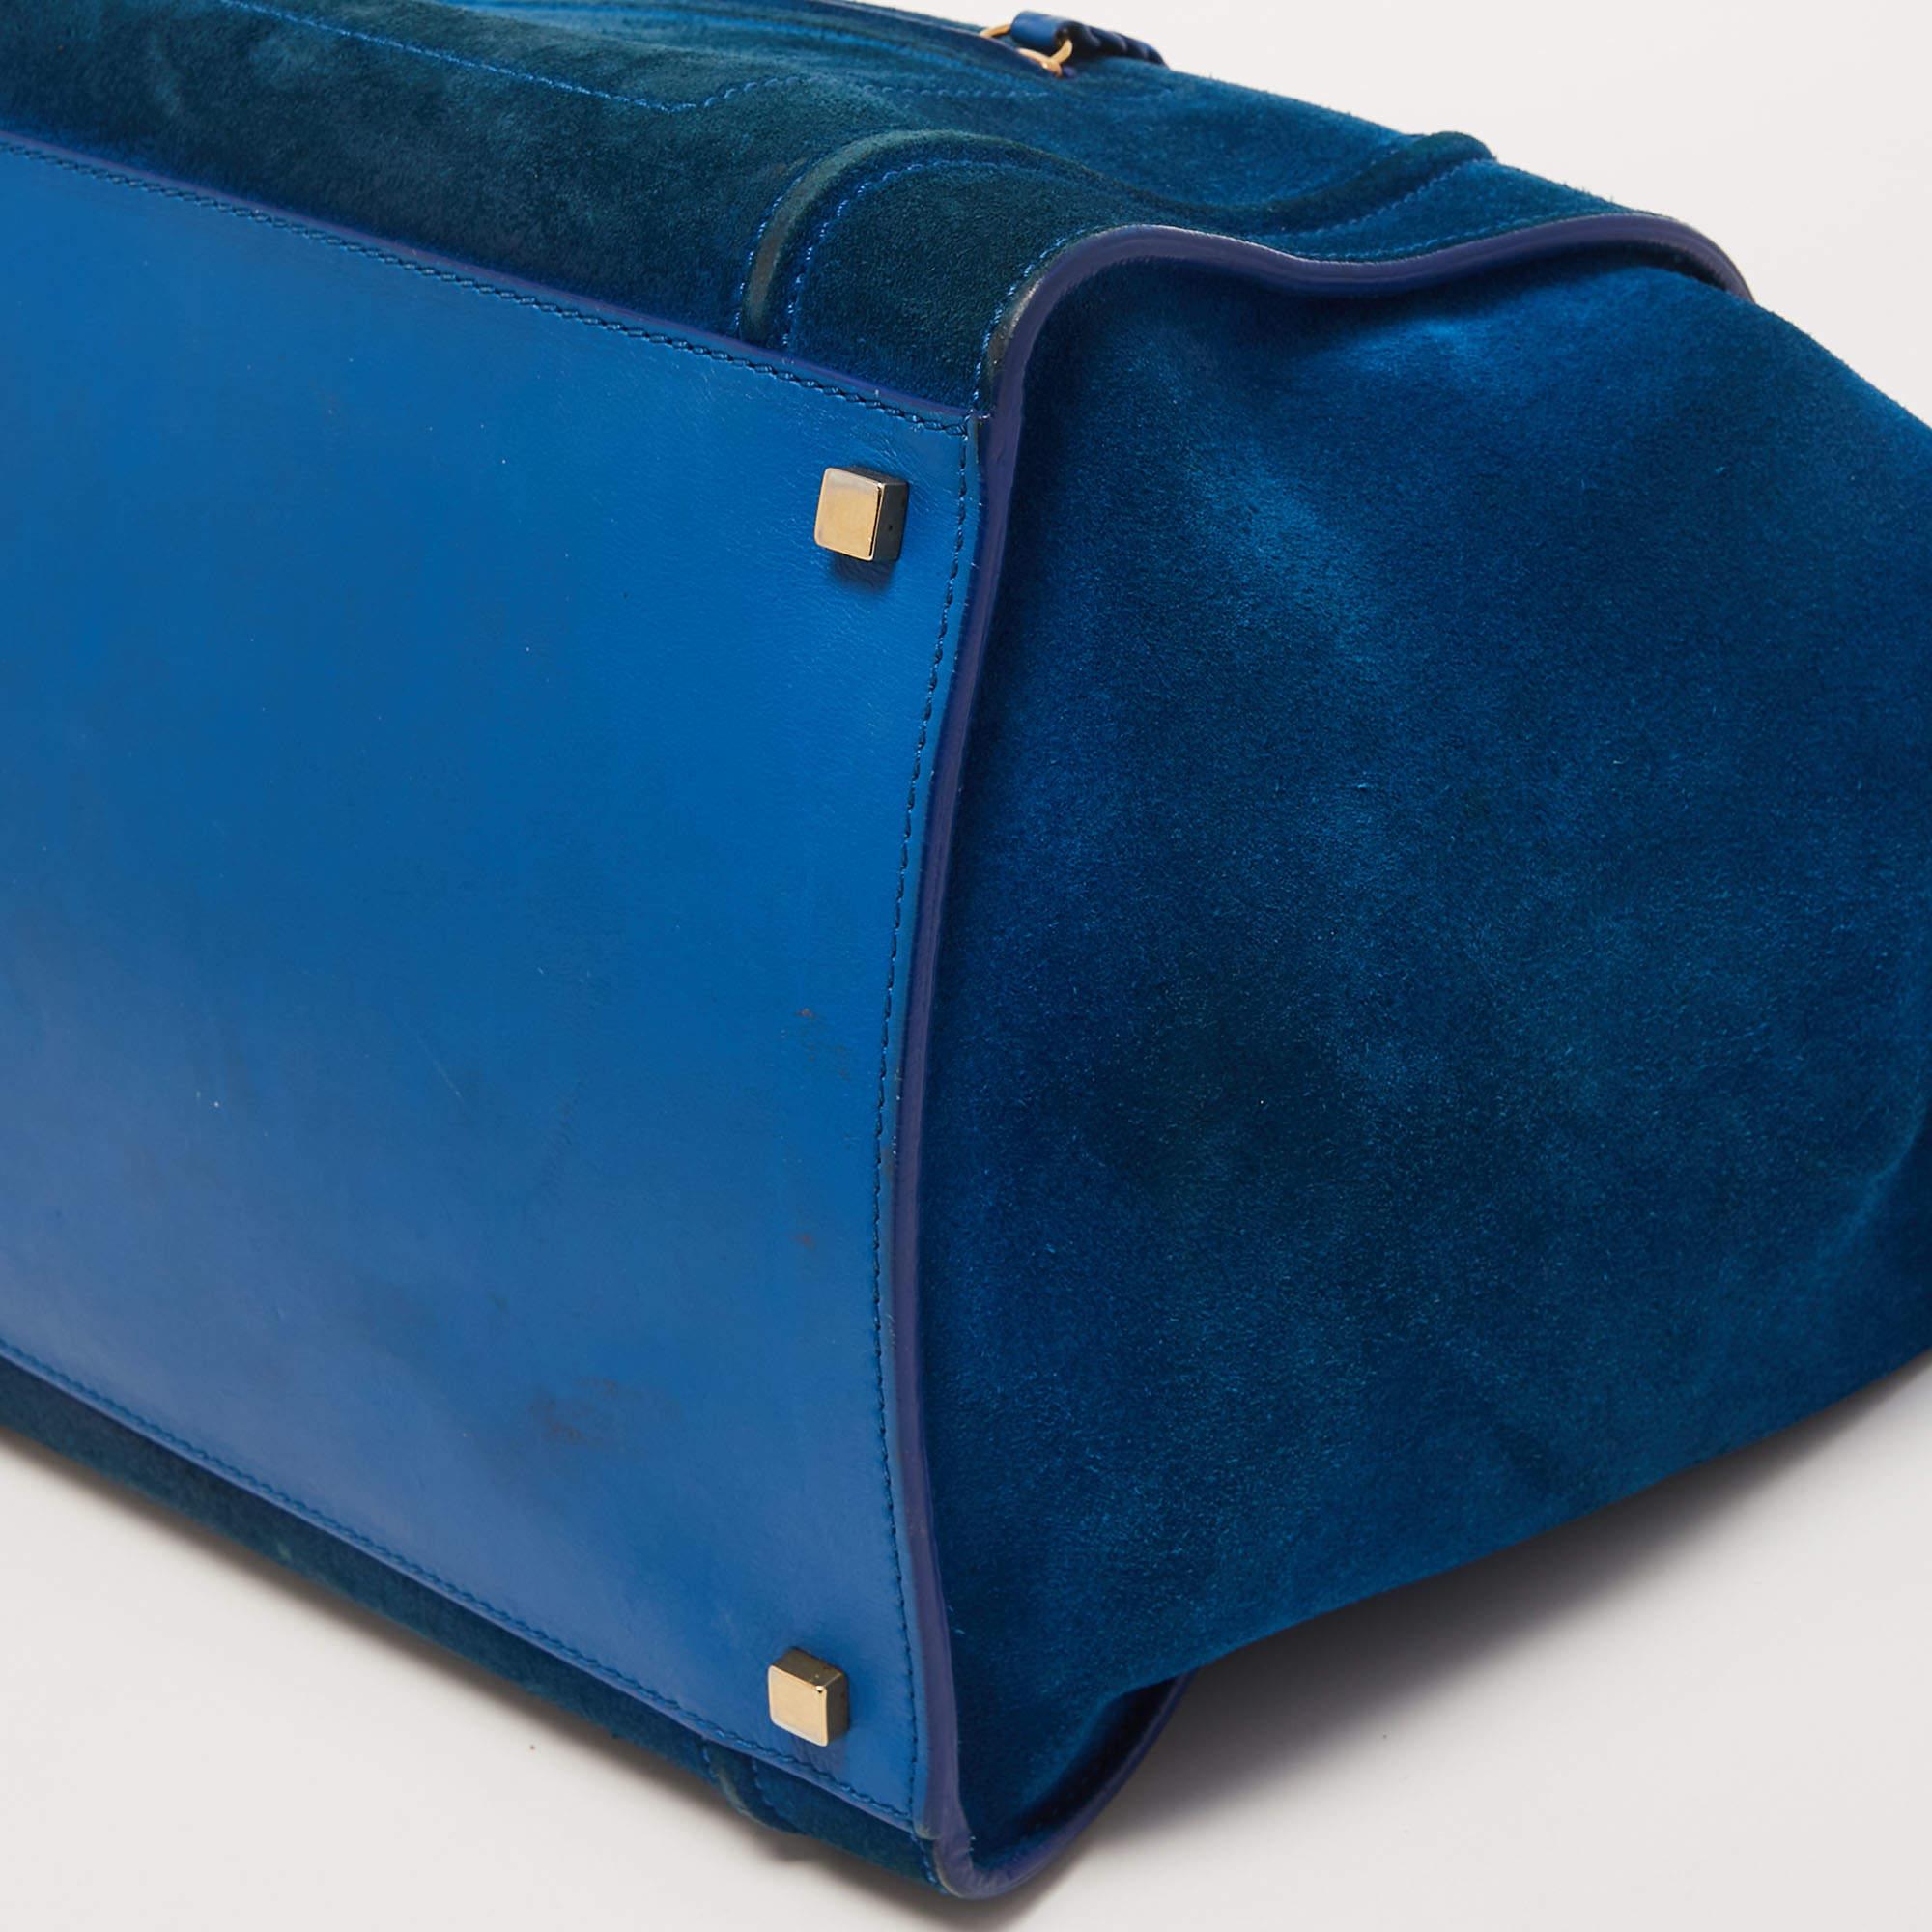 Celine Blue Leather and Suede Medium Phantom Luggage Tote 11